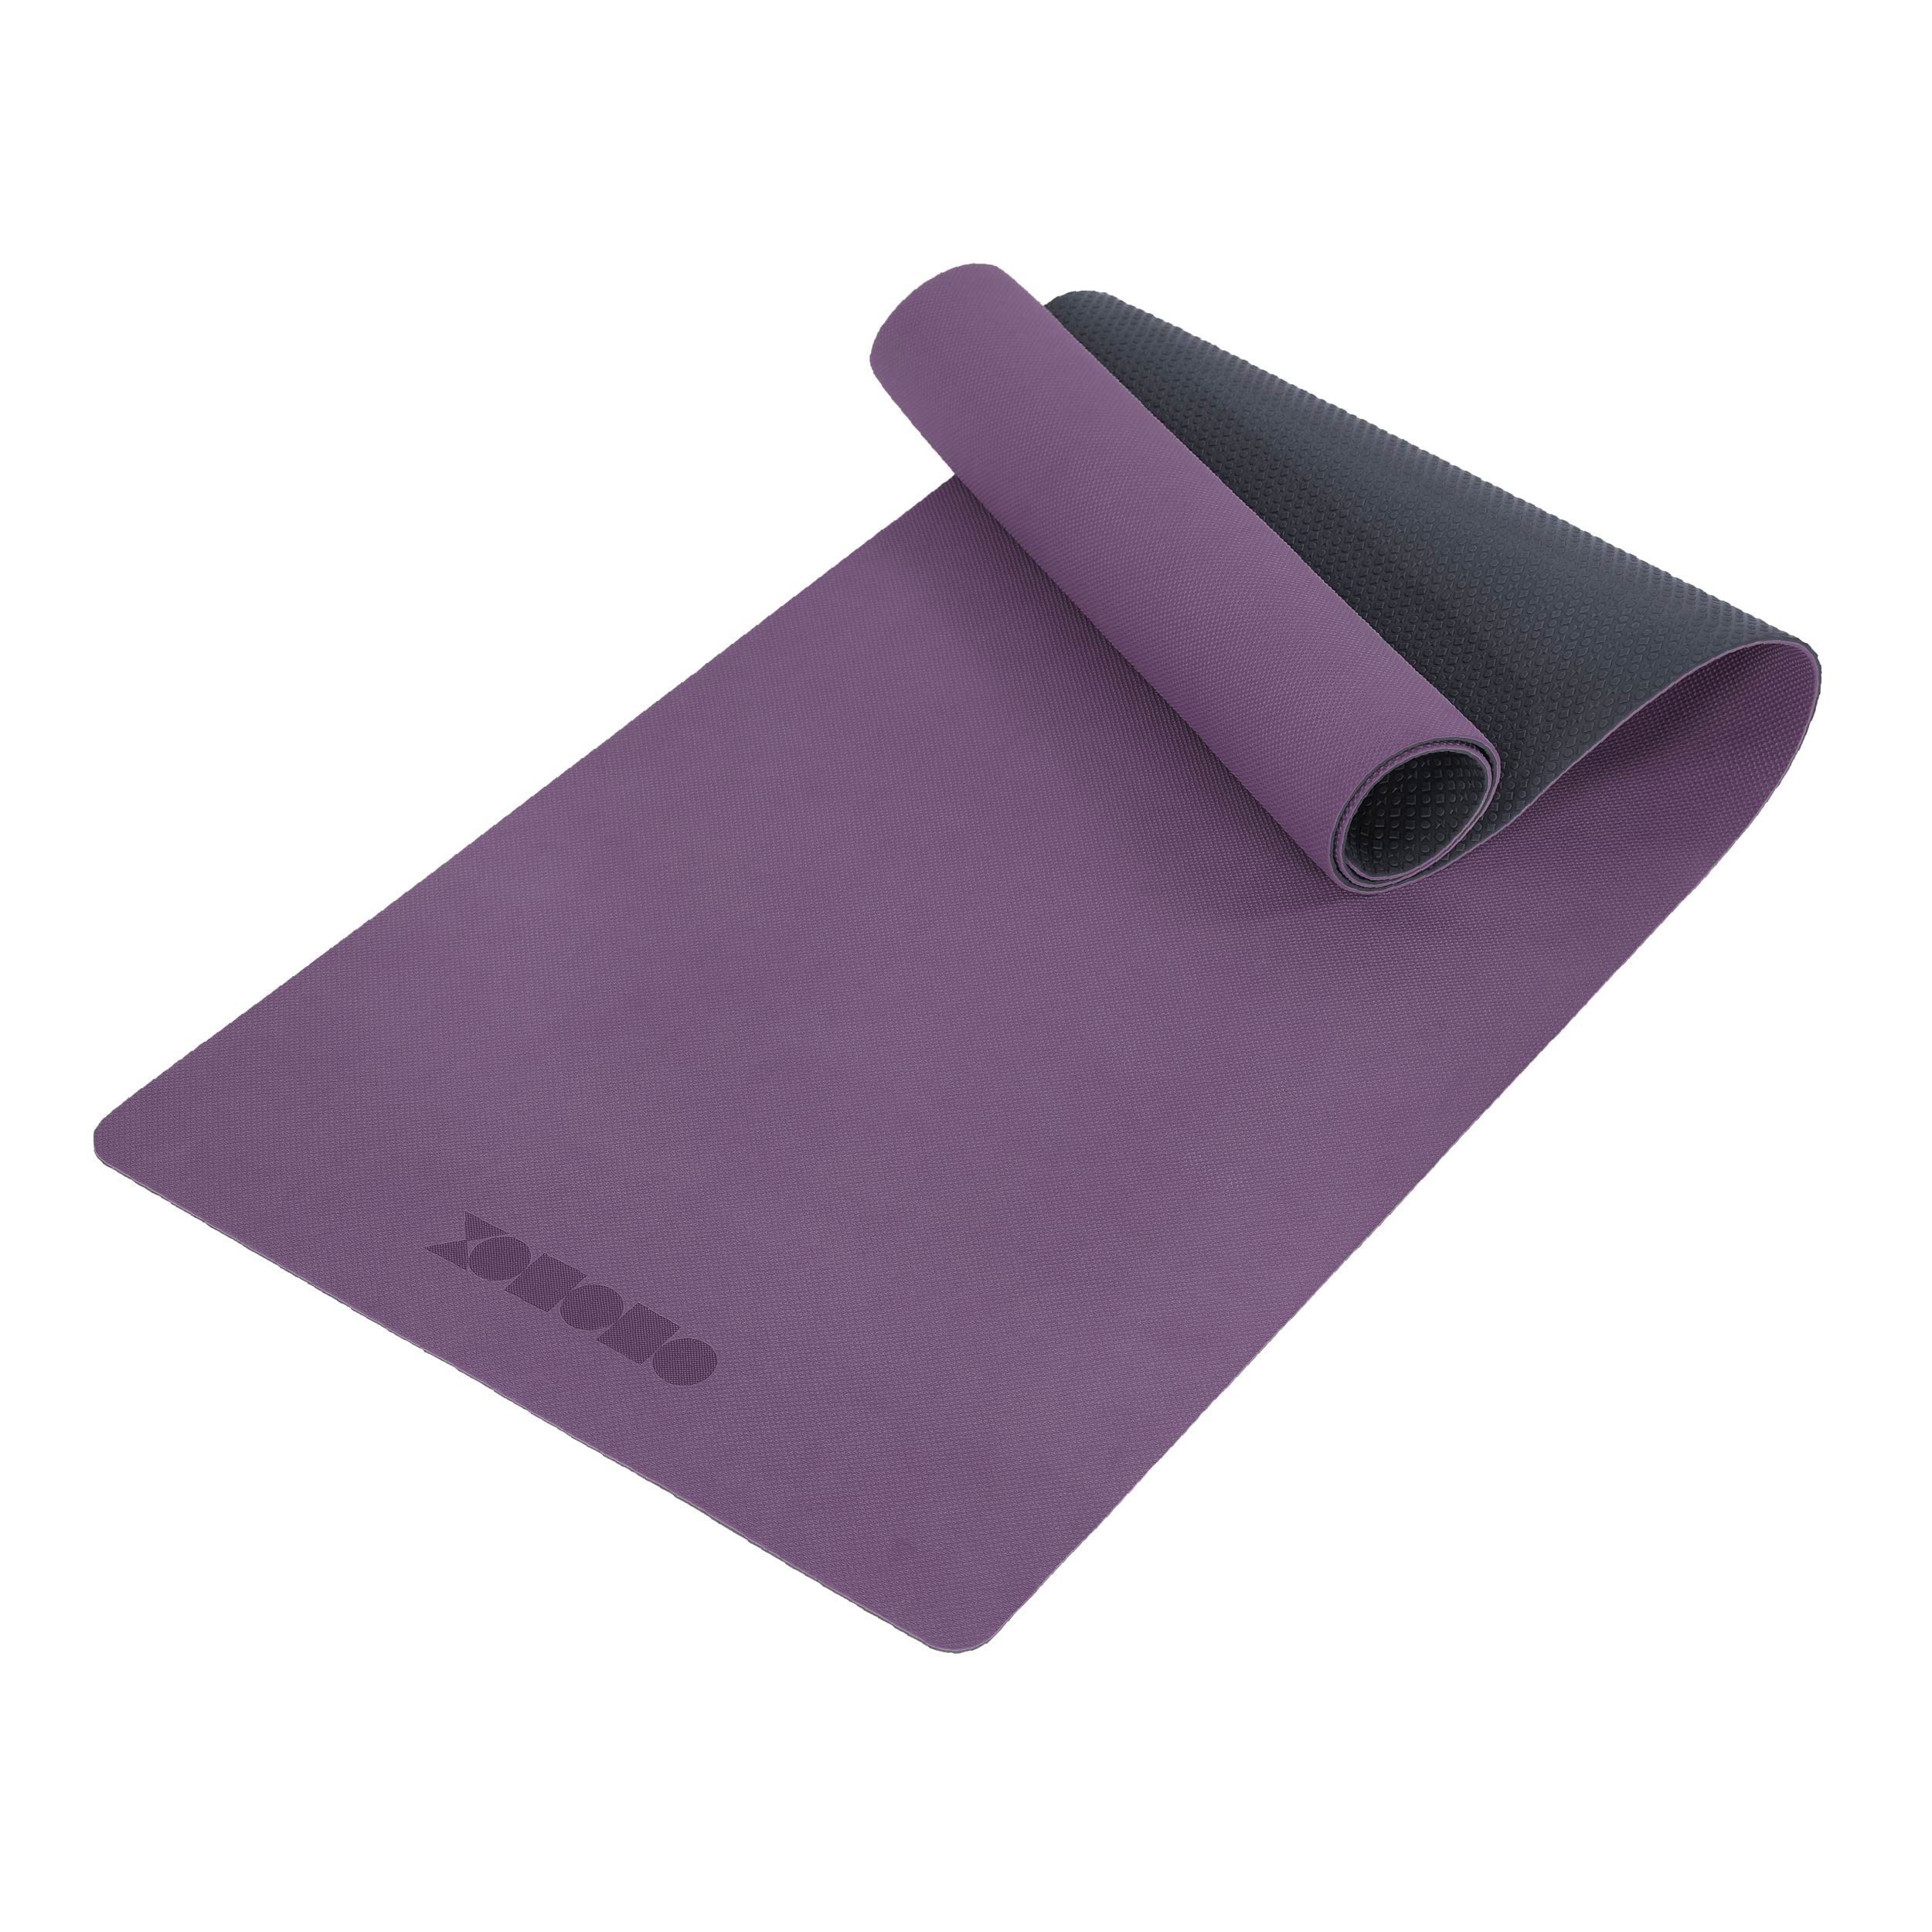 Eco-friendly TPE non-slip sports fitness yoga mat Purple/Navy - ododos